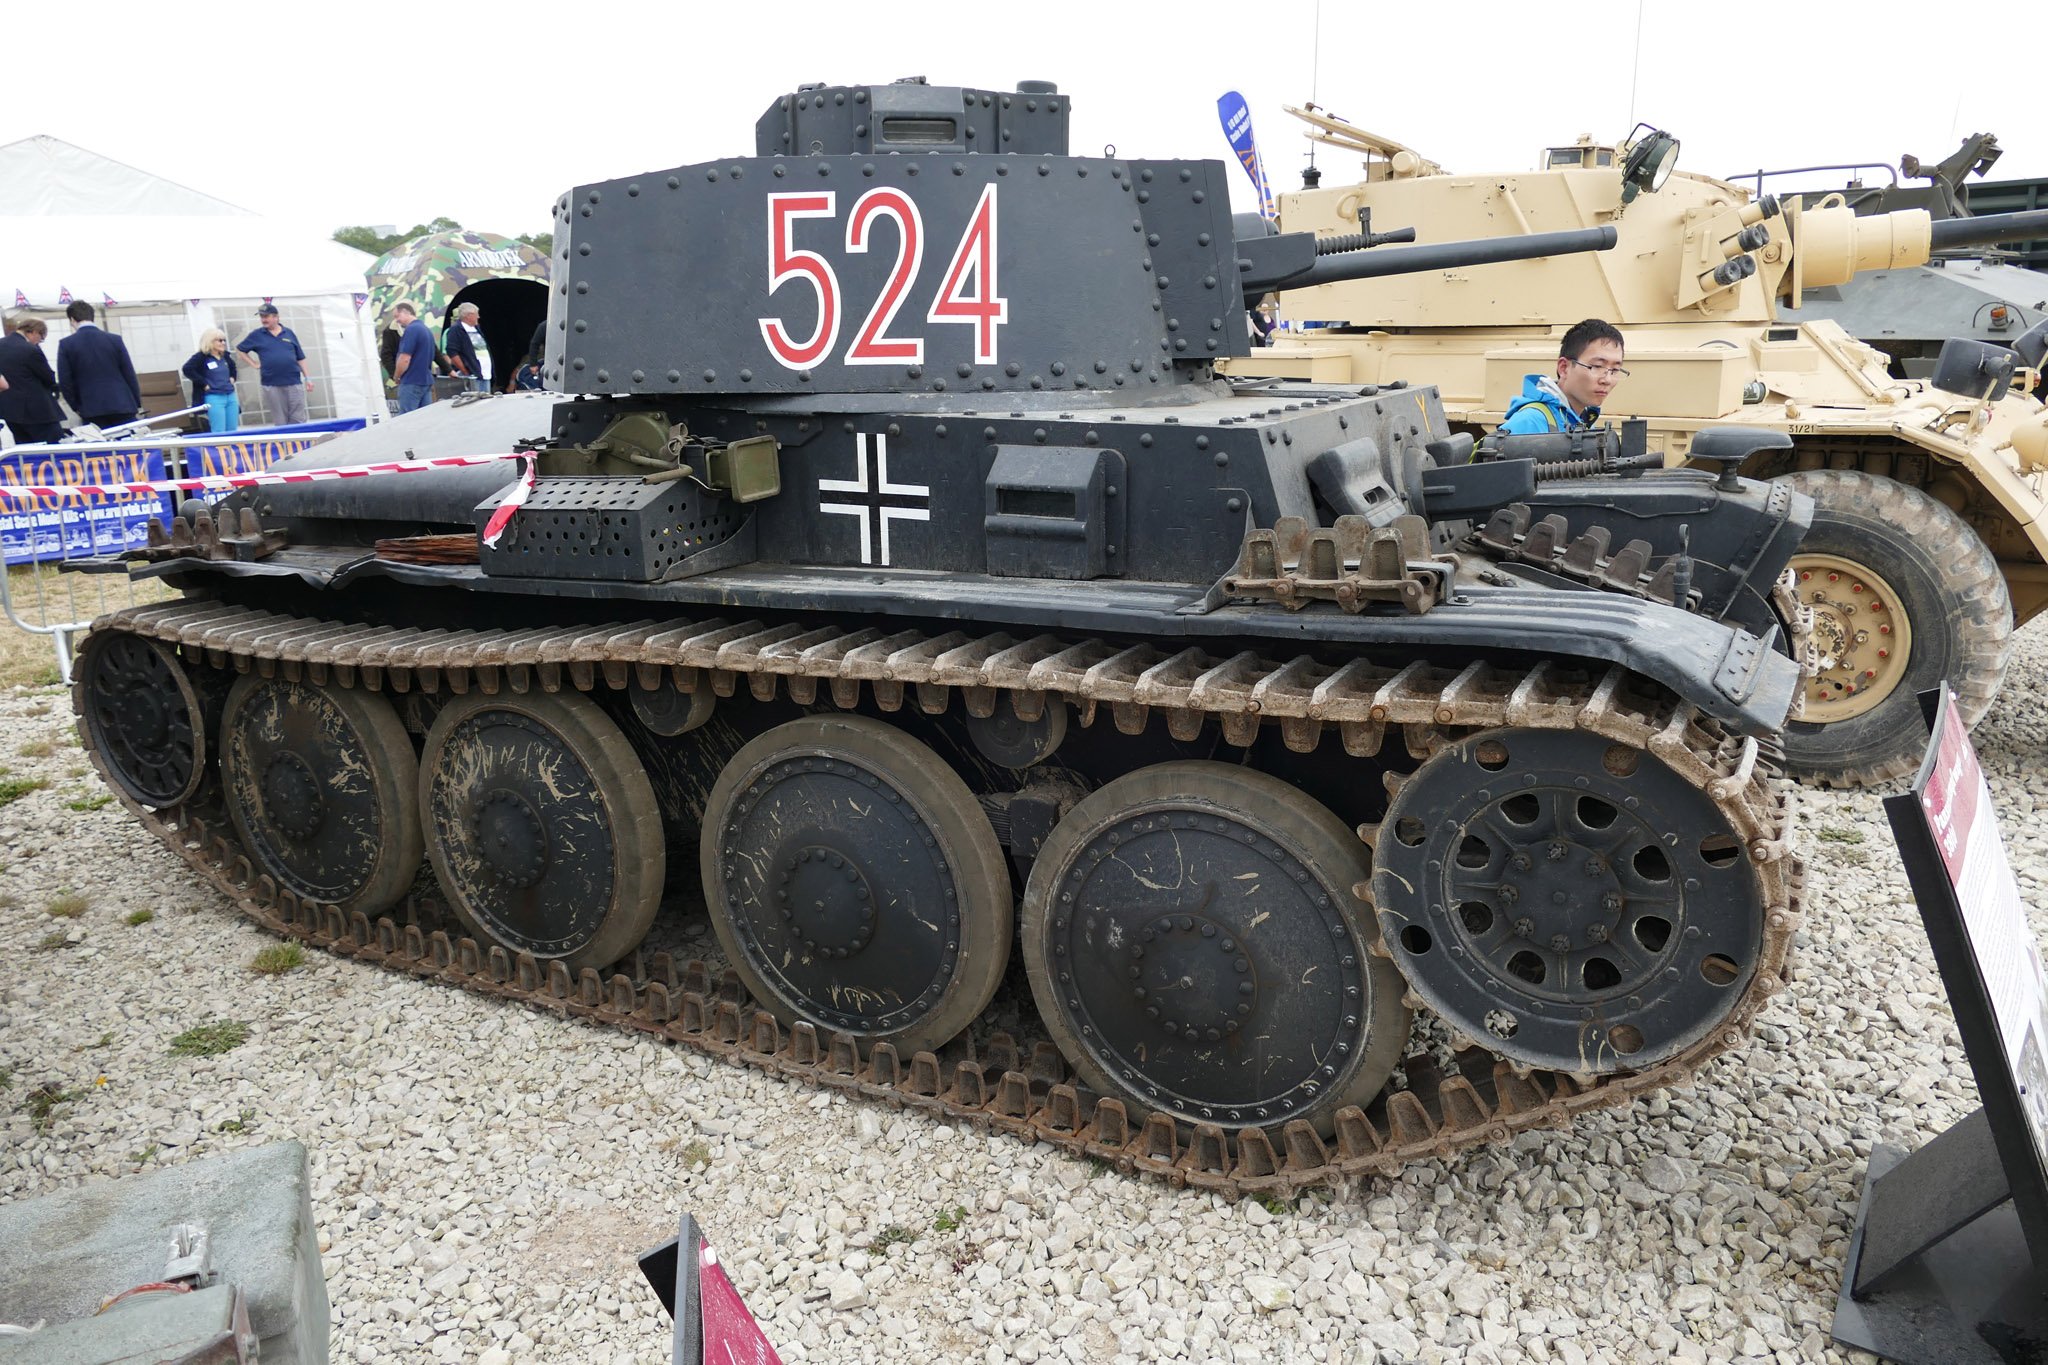 Pz kpfw 38. PZ 38 T. Чешский танк 38 t. Чешский танк Прага 38-т. Танк PZ 38 T.